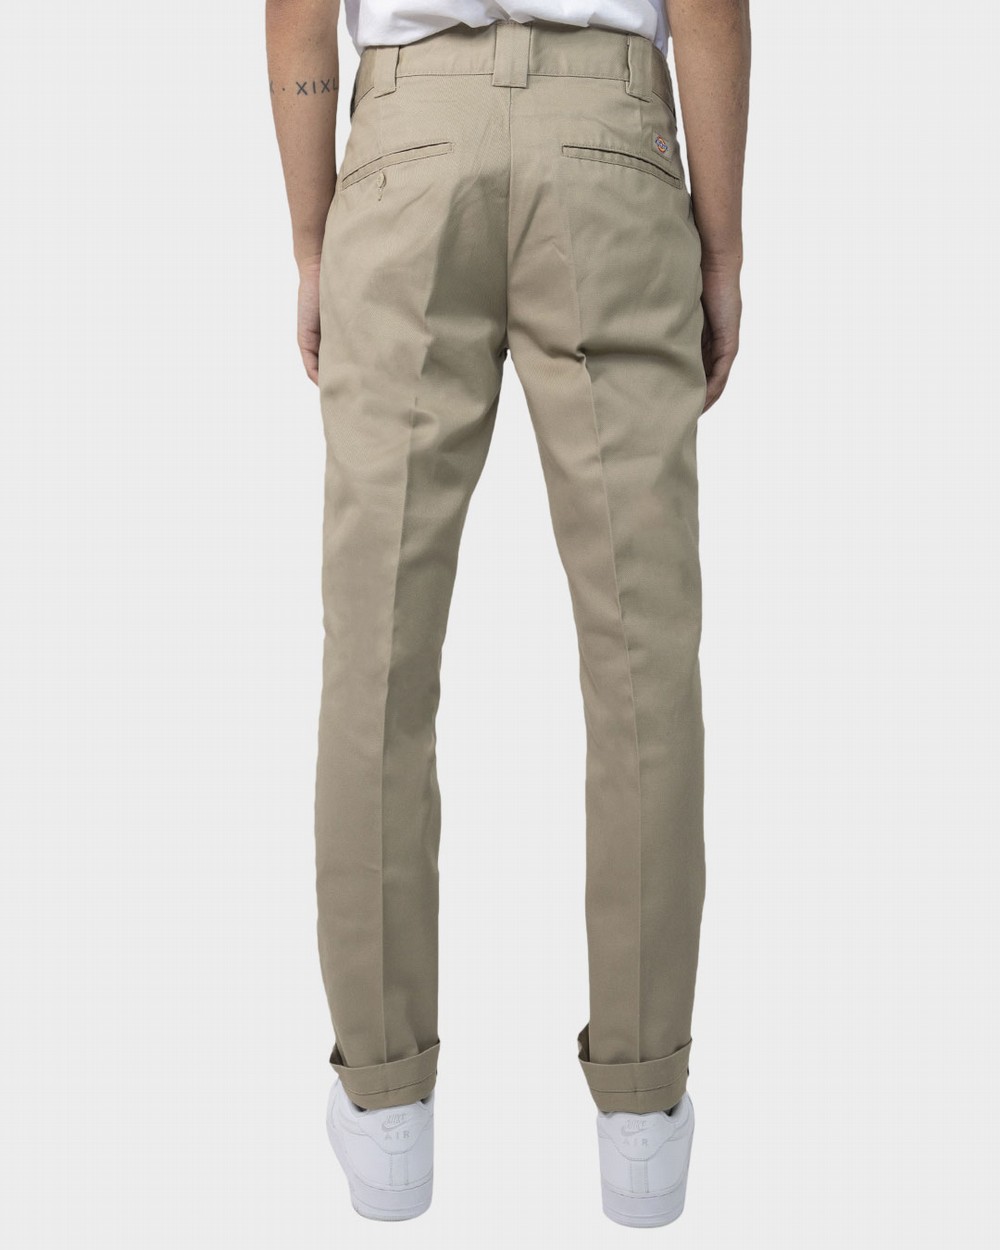 Ralph Lauren Polo Jeans Company Mens Khaki Pants 33